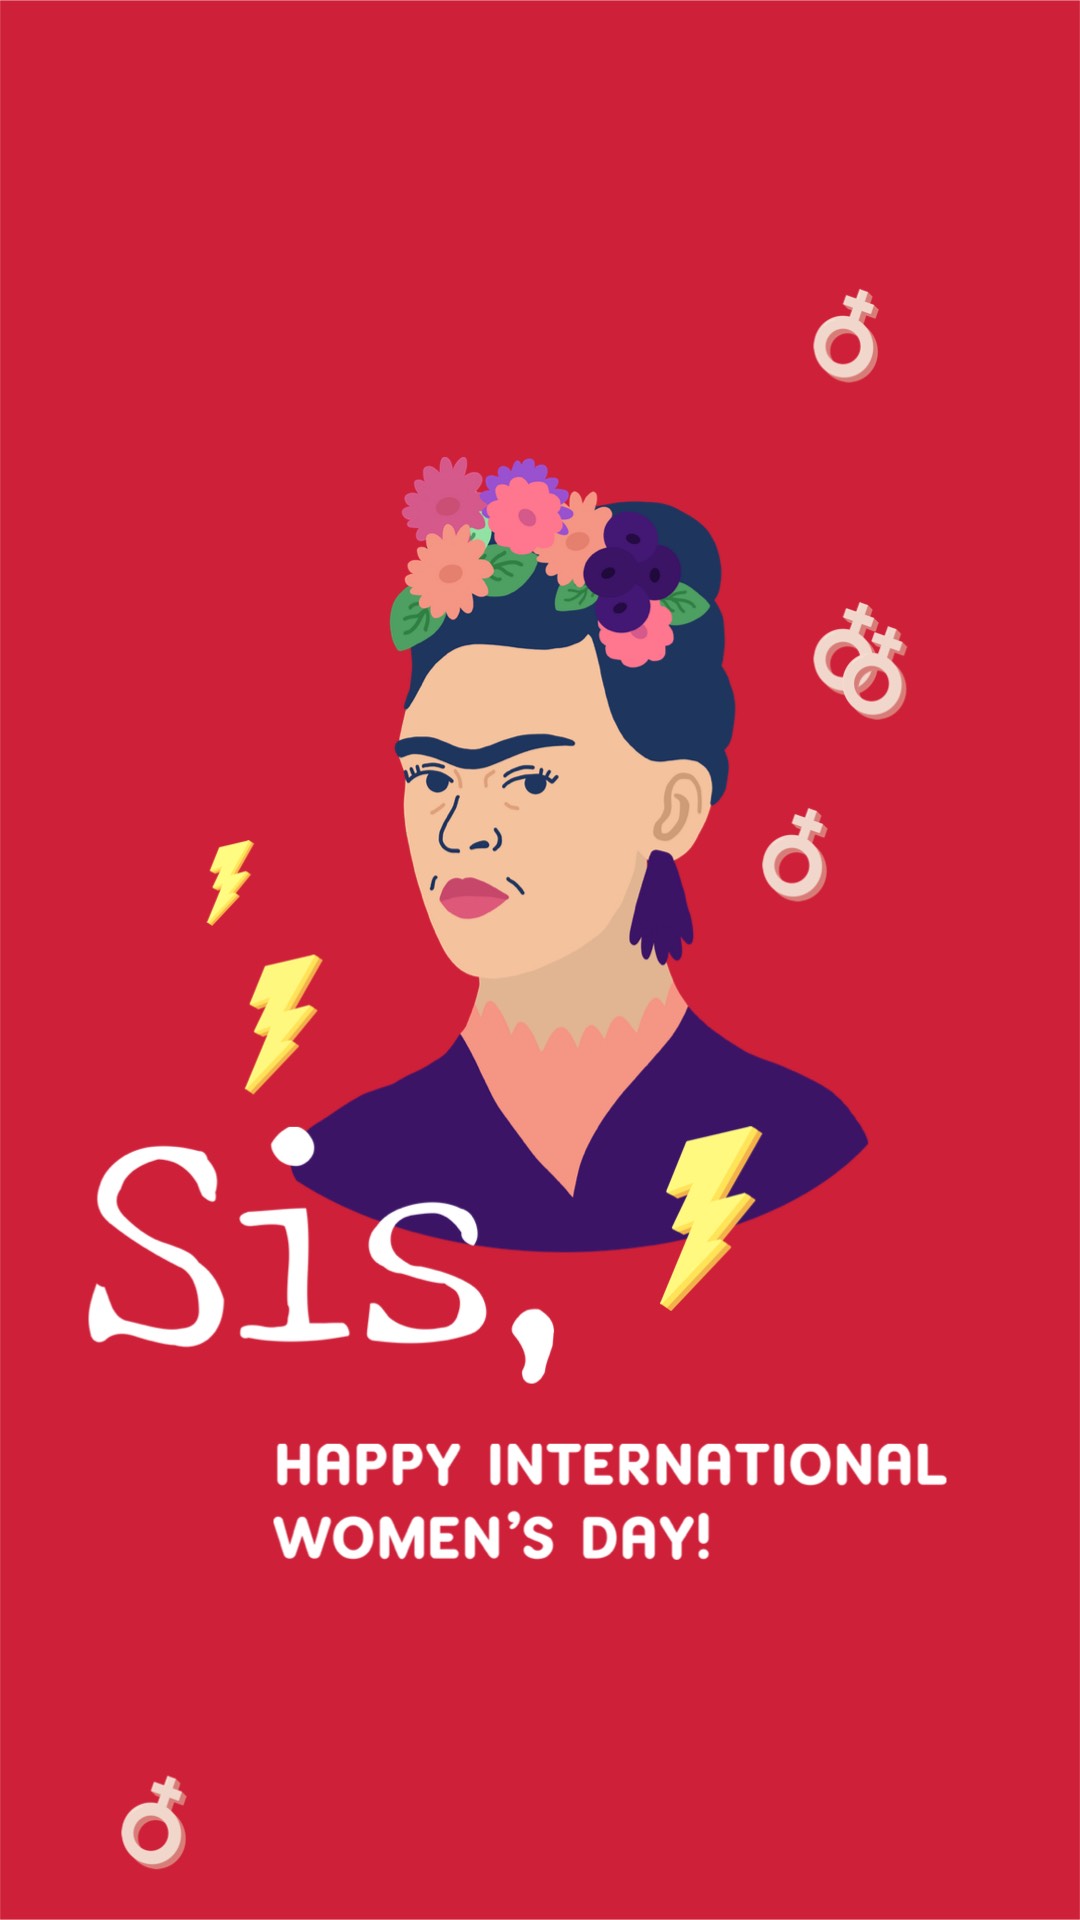 Happy International Women’s Day Frida Carlo illustration